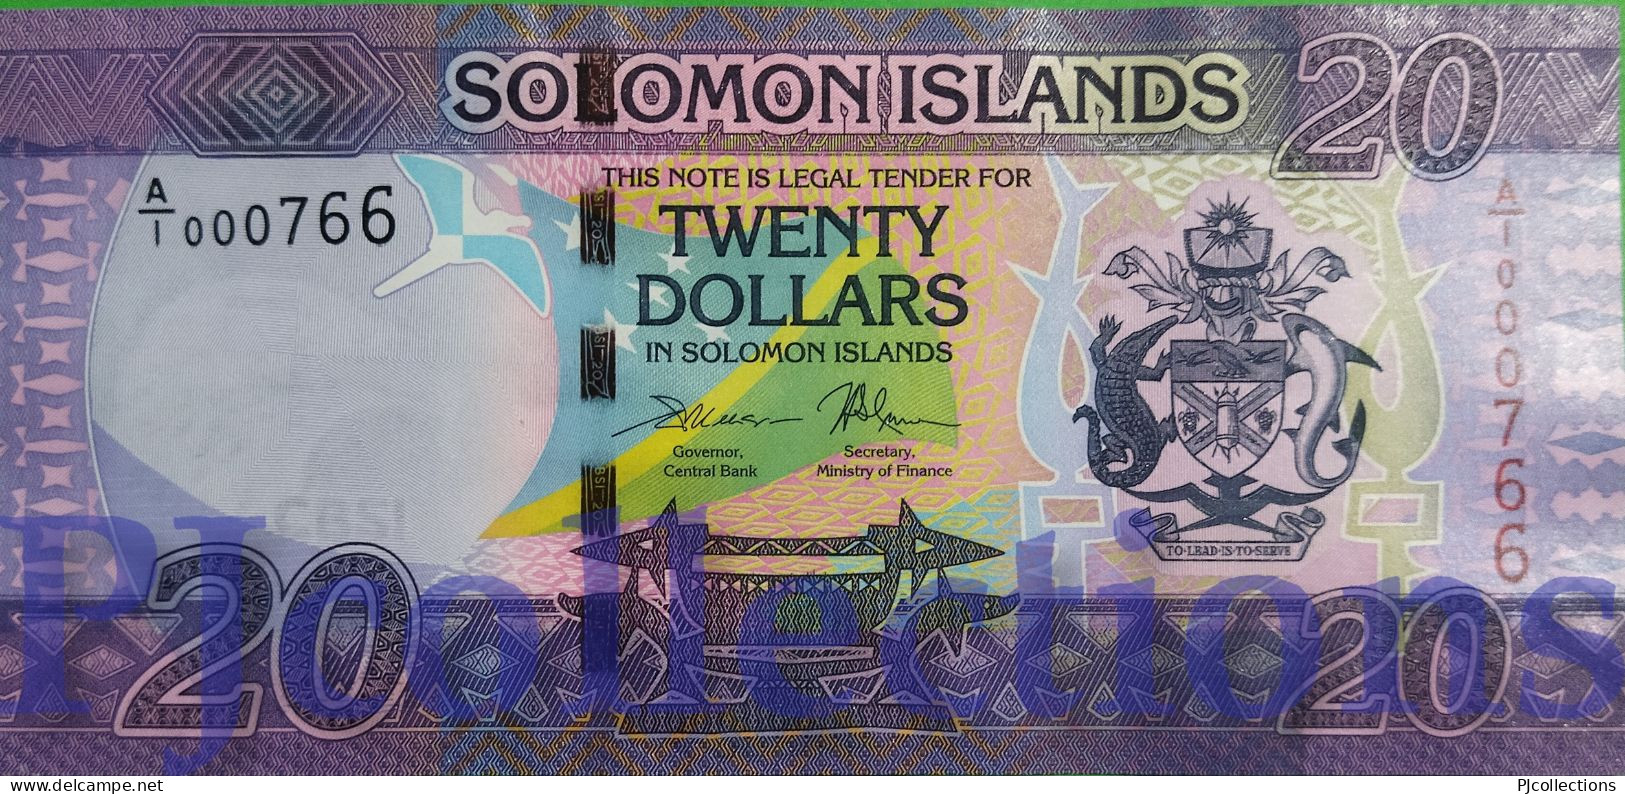 SOLOMON ISLANDS 20 DOLLARS 2017 PICK 34 UNC LOW SERIAL NUMBER "A/1 000766" - Isla Salomon